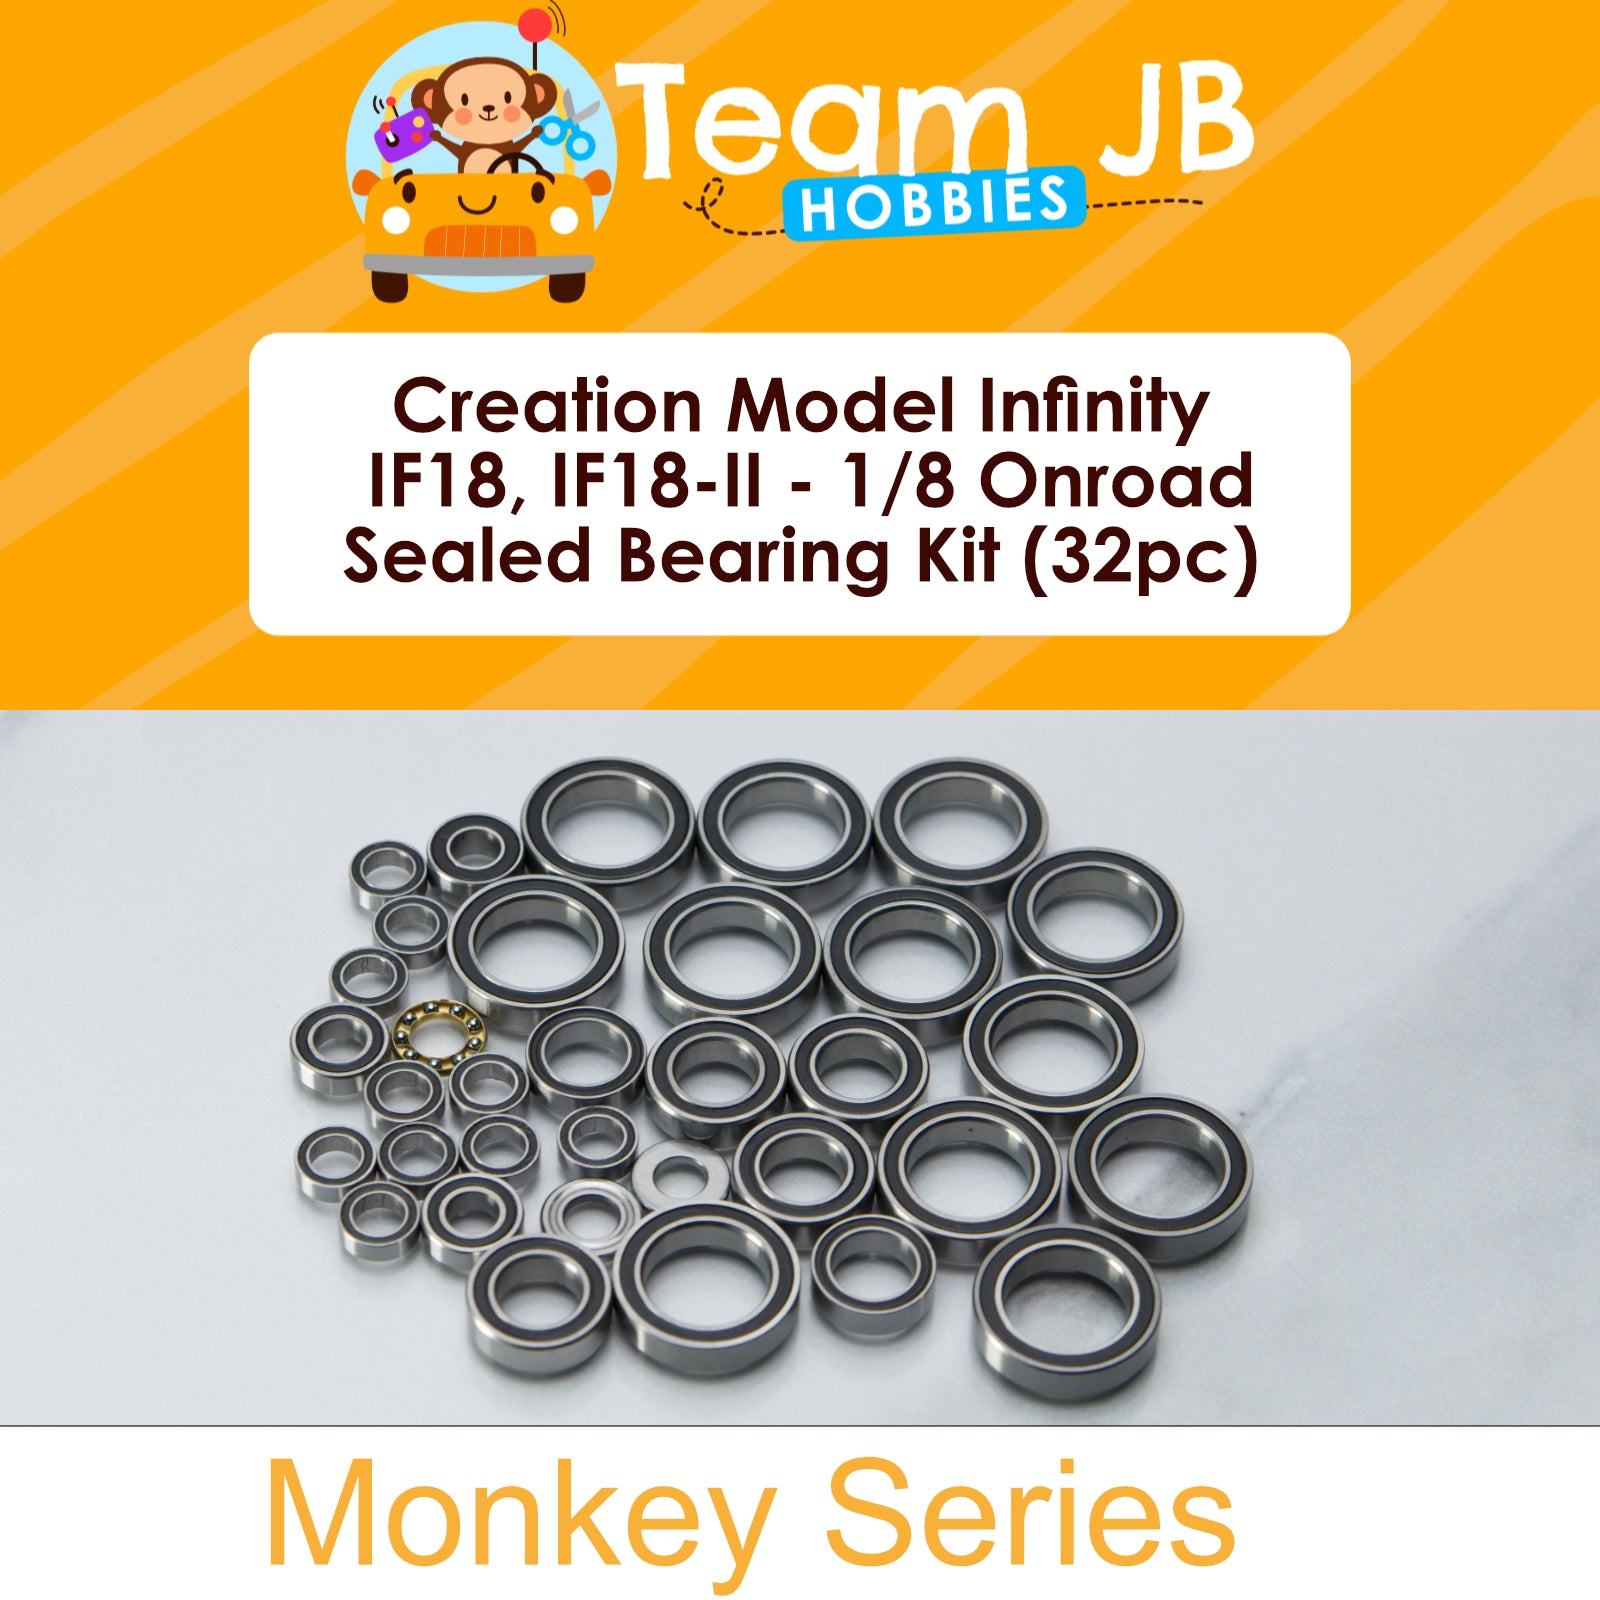 Creation Model Infinity IF18 1/8 Onroad, Infinity IF18-II 1/8 Onroad - Sealed Bearing Kit